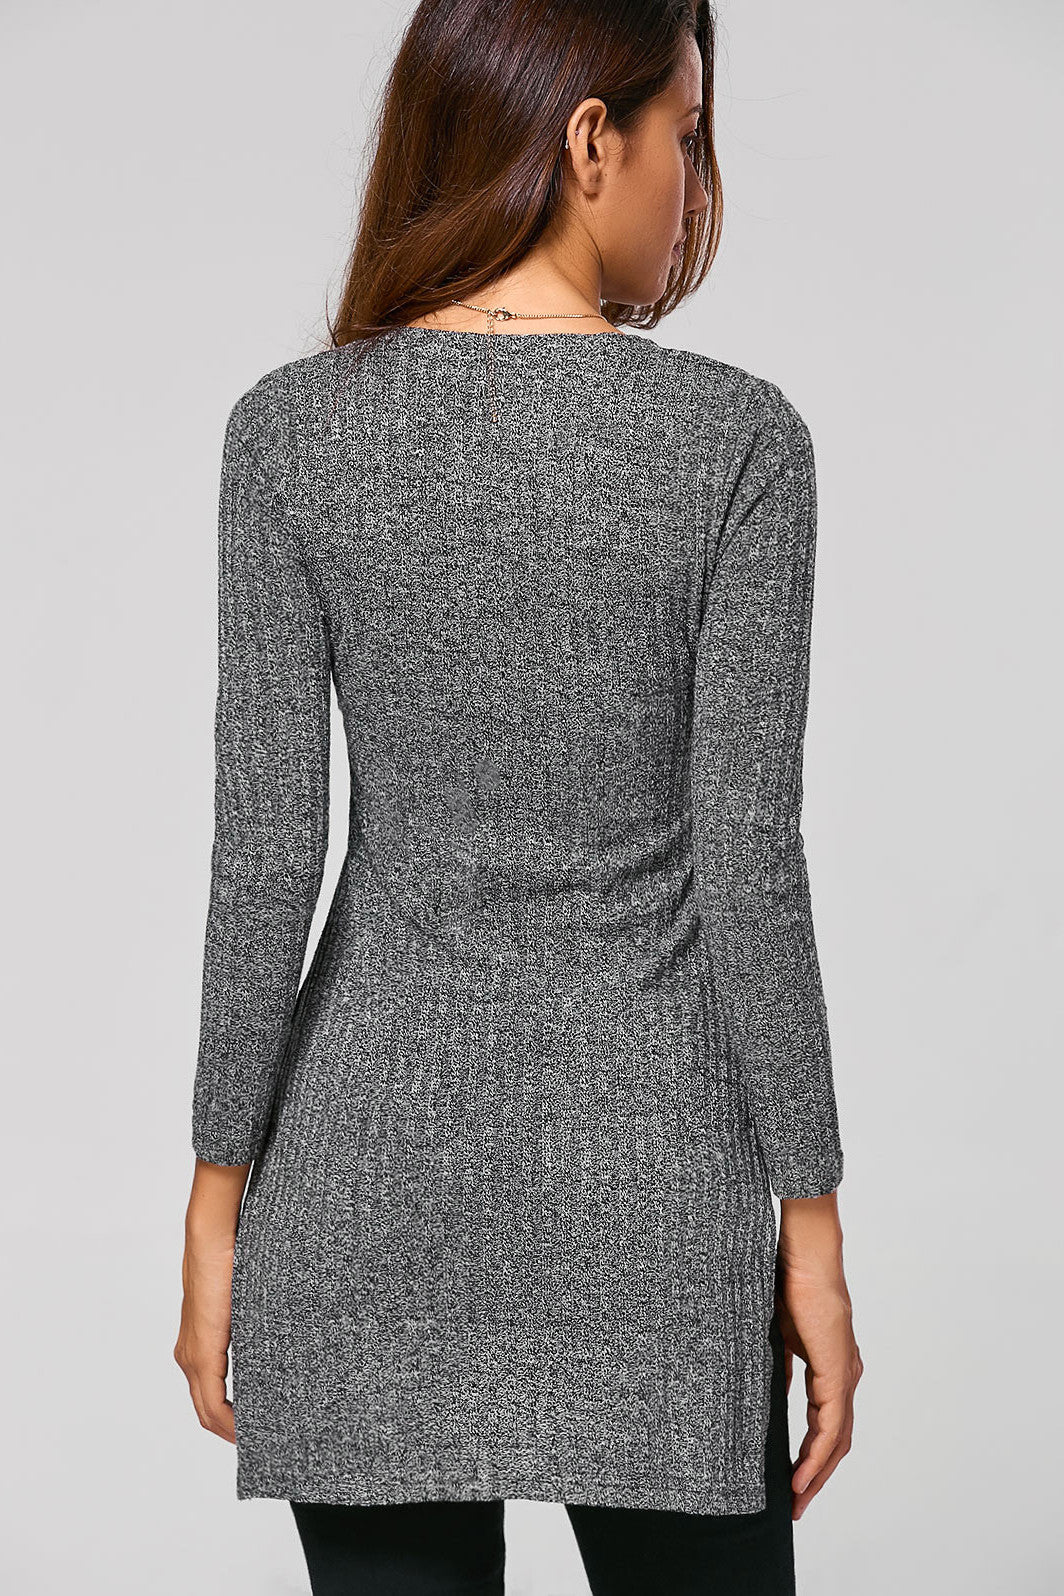 Button Split Irregular Long Sleeves Pullover Sweater